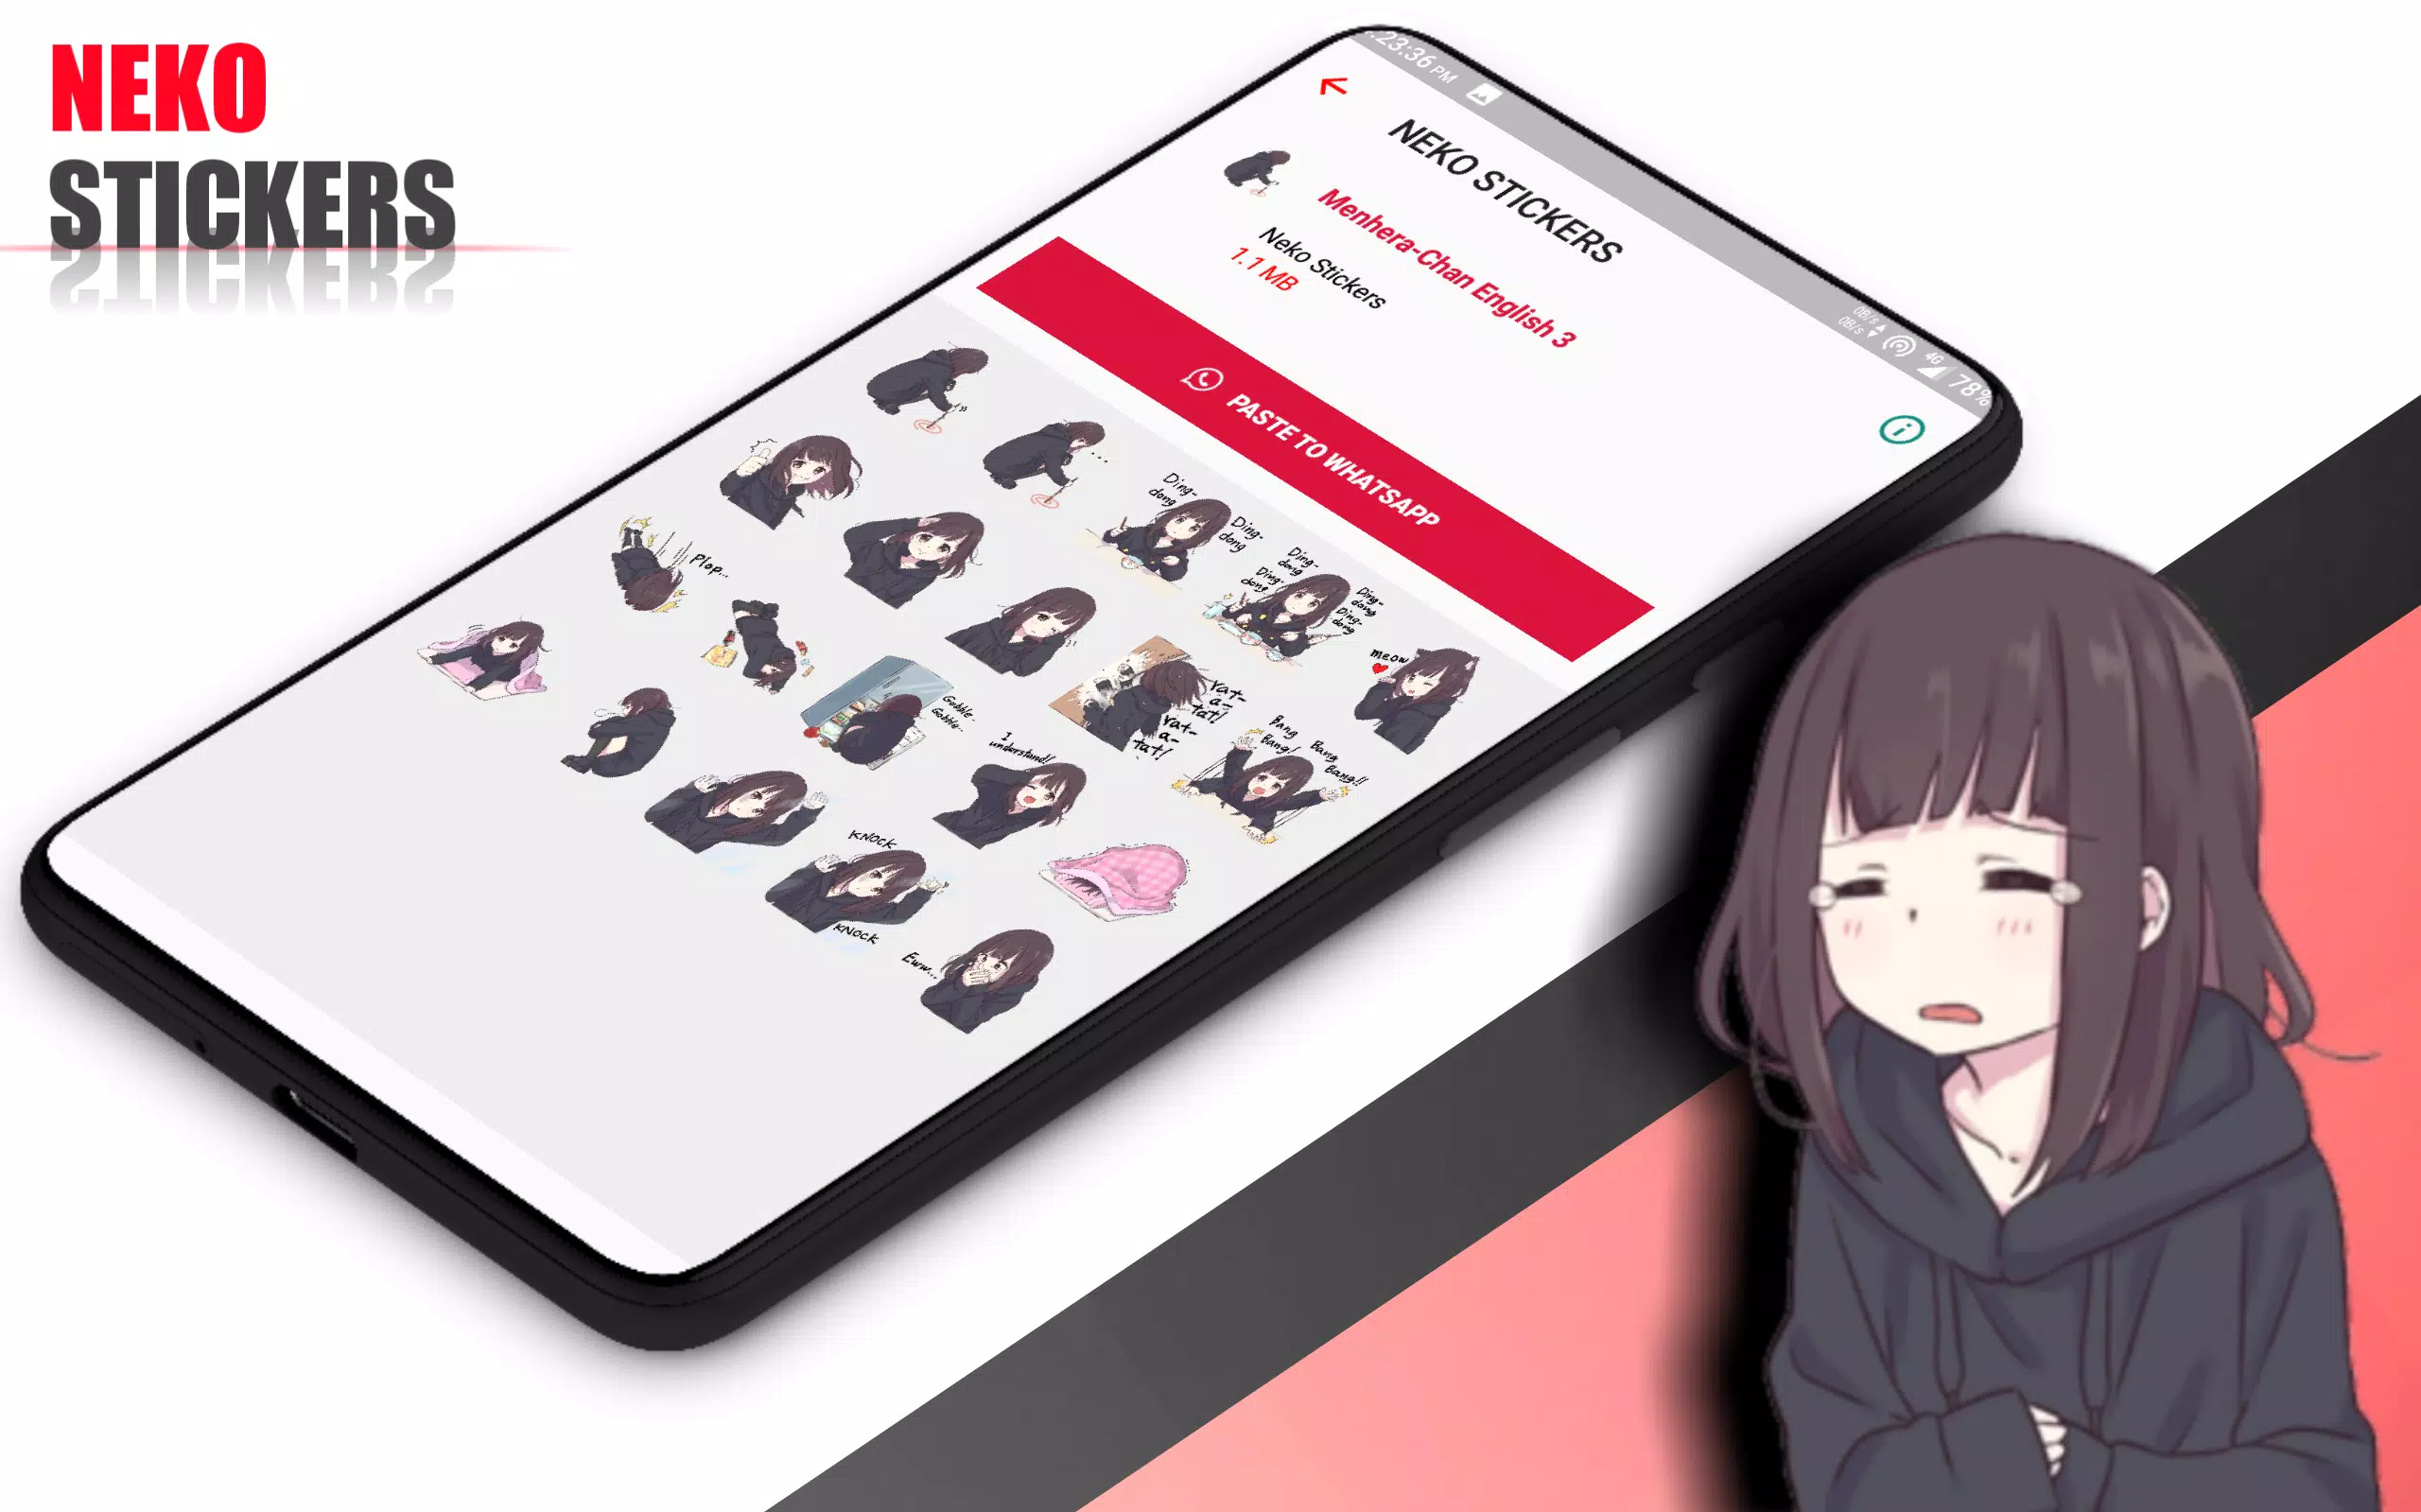 Menhera-Chan EN APK for Android Download